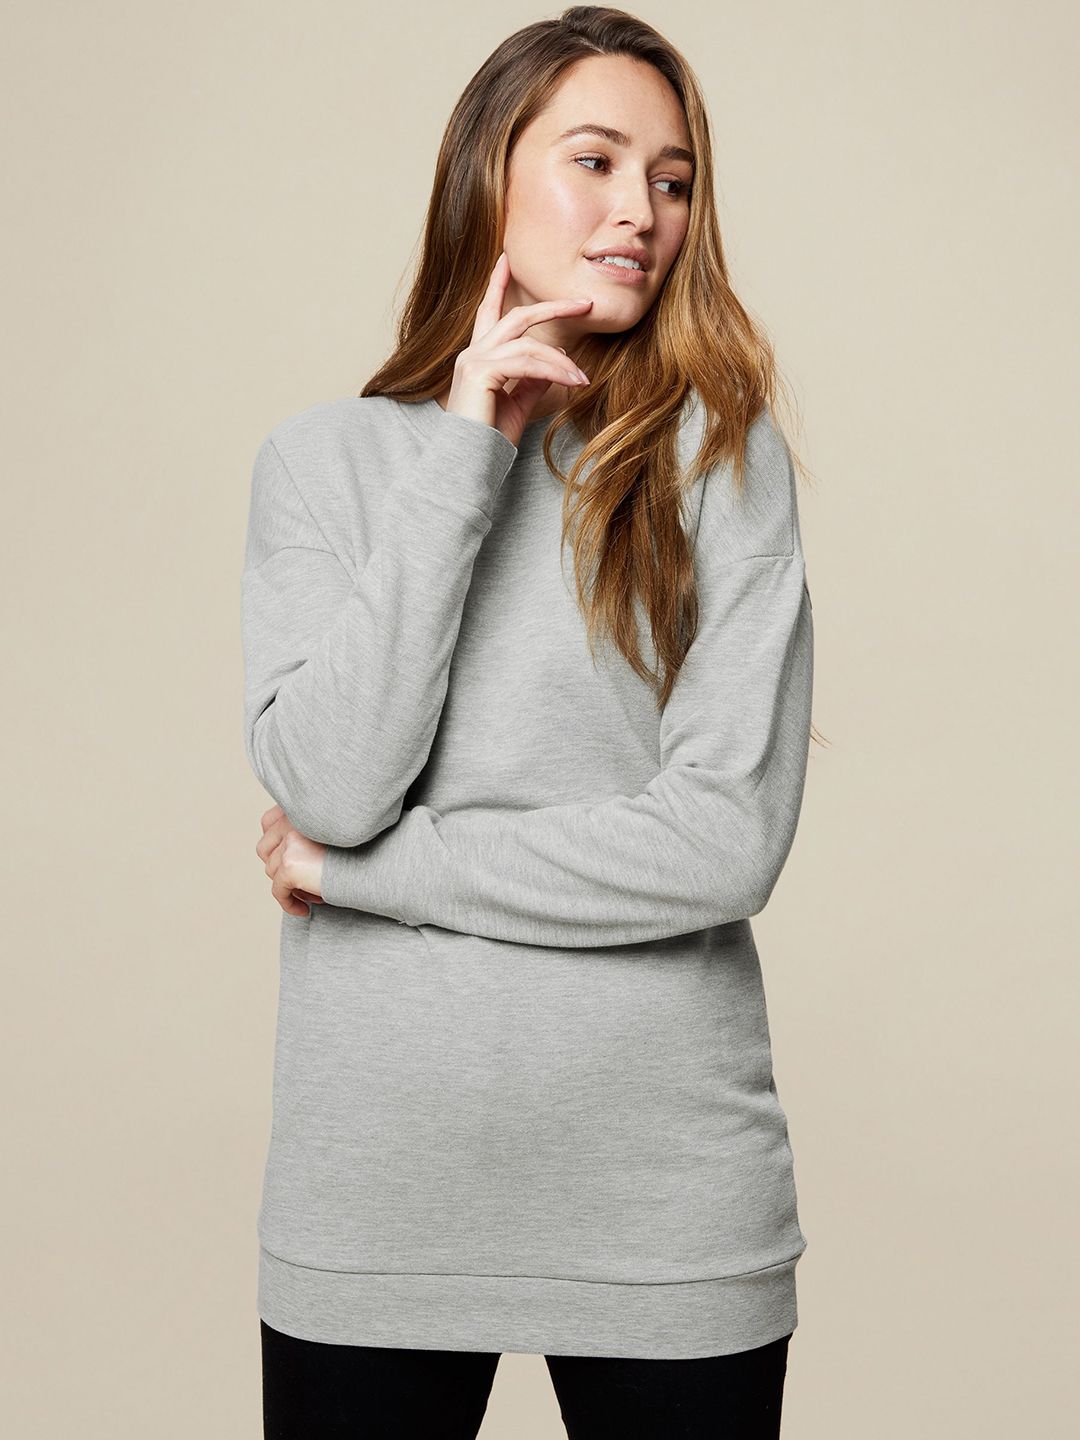 DOROTHY PERKINS Women Grey Melange Solid Lounge Sweatshirt Price in India